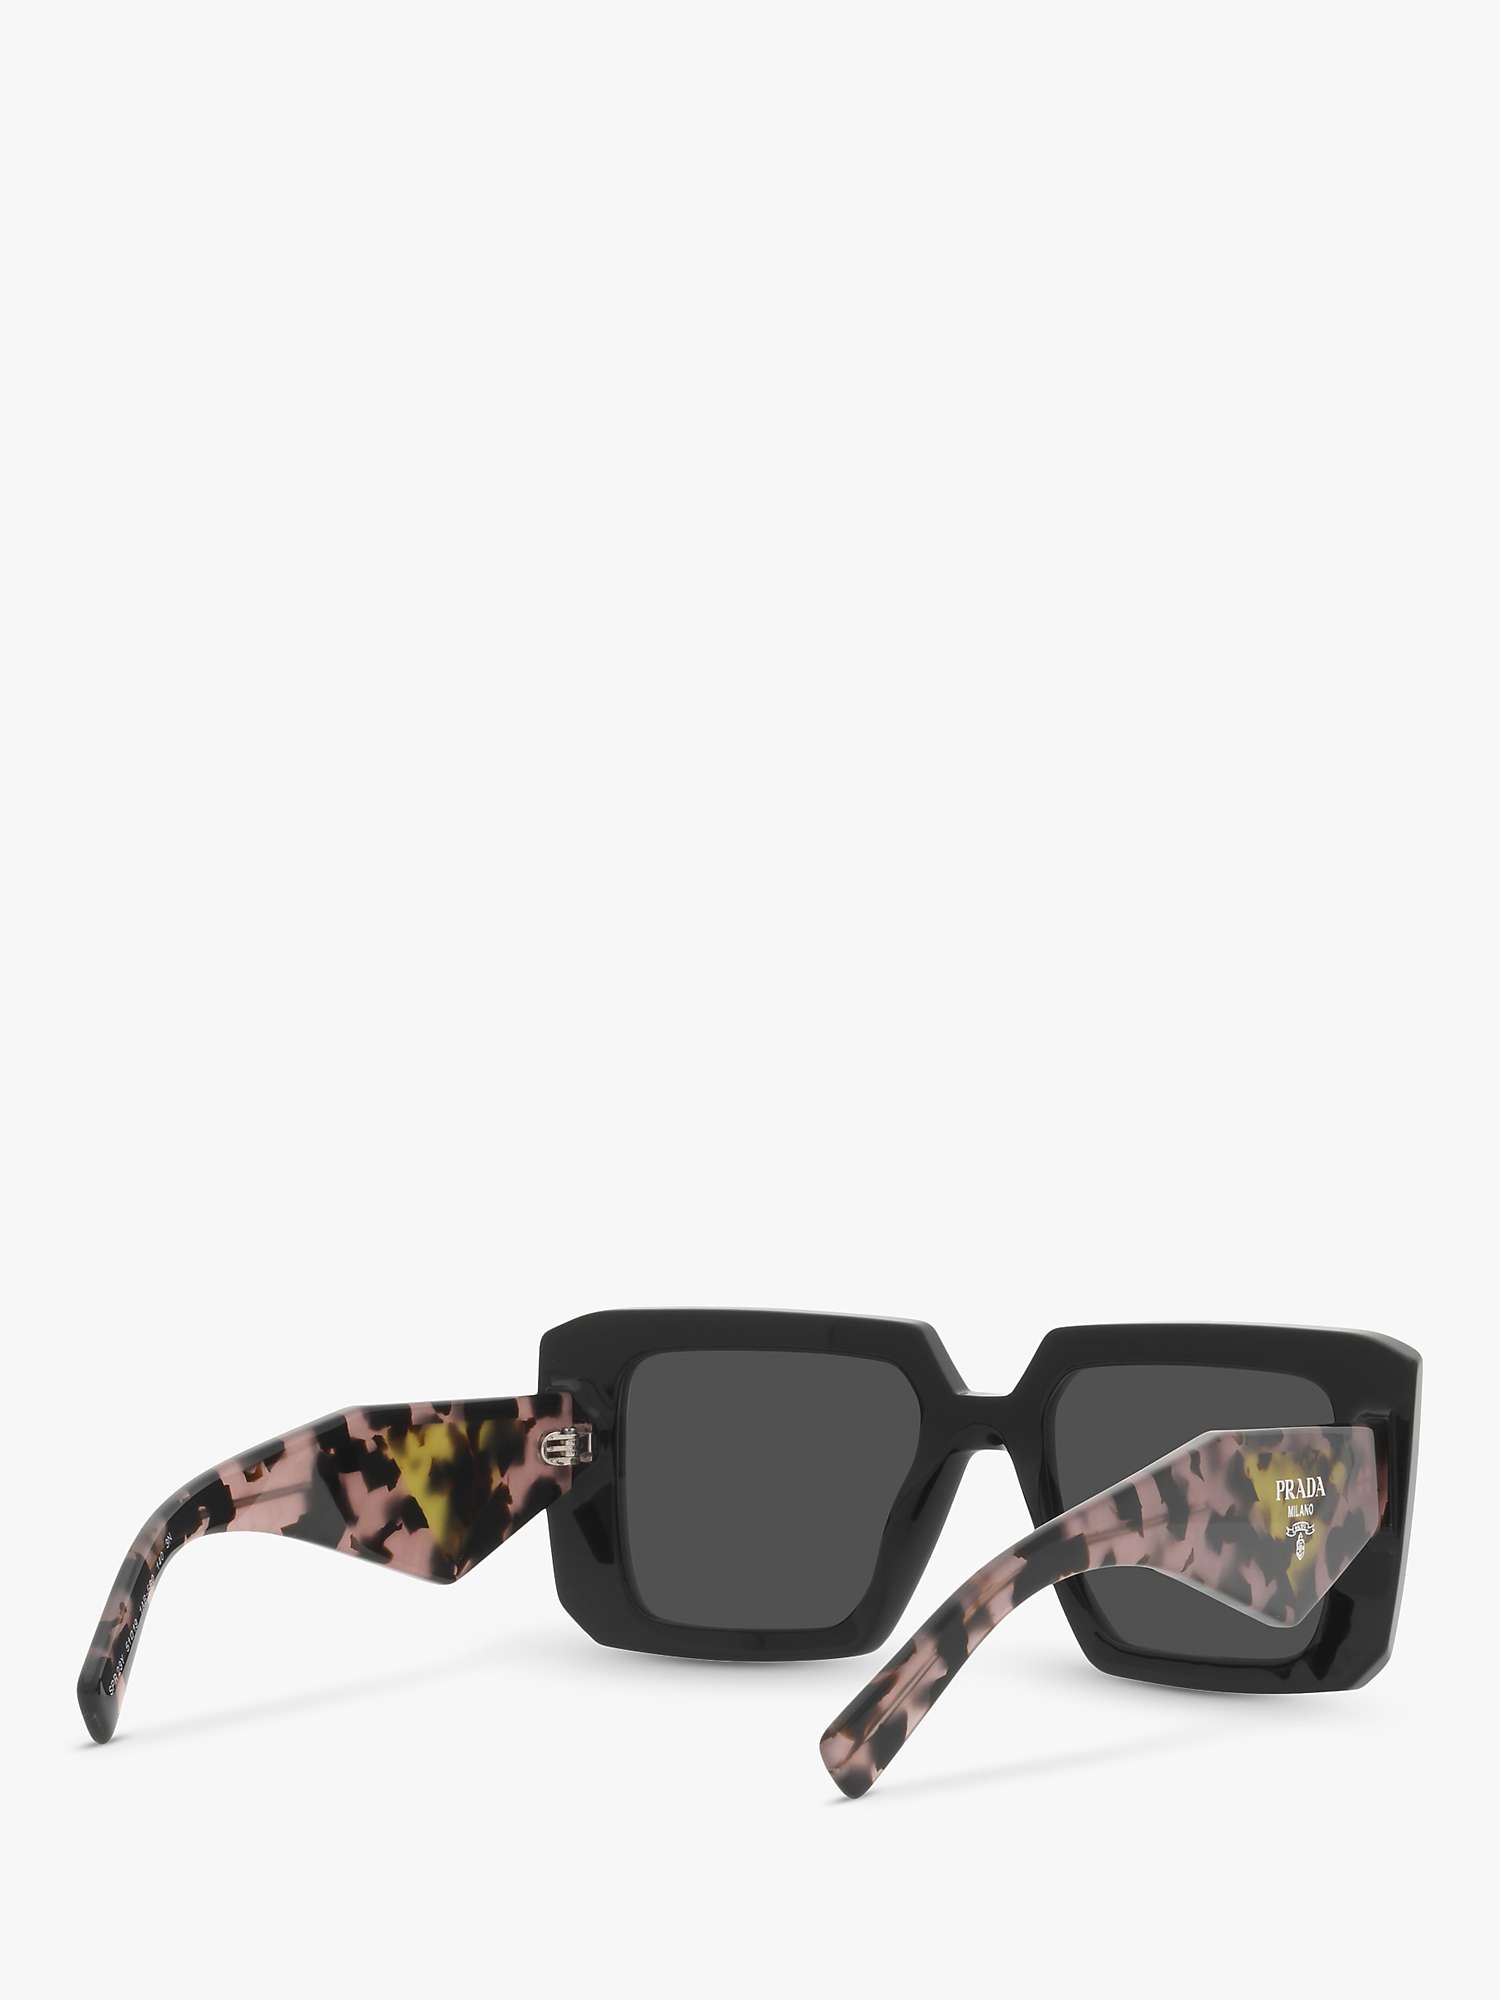 Buy Prada PR 23YS Women's Chunky Square Sunglasses Online at johnlewis.com